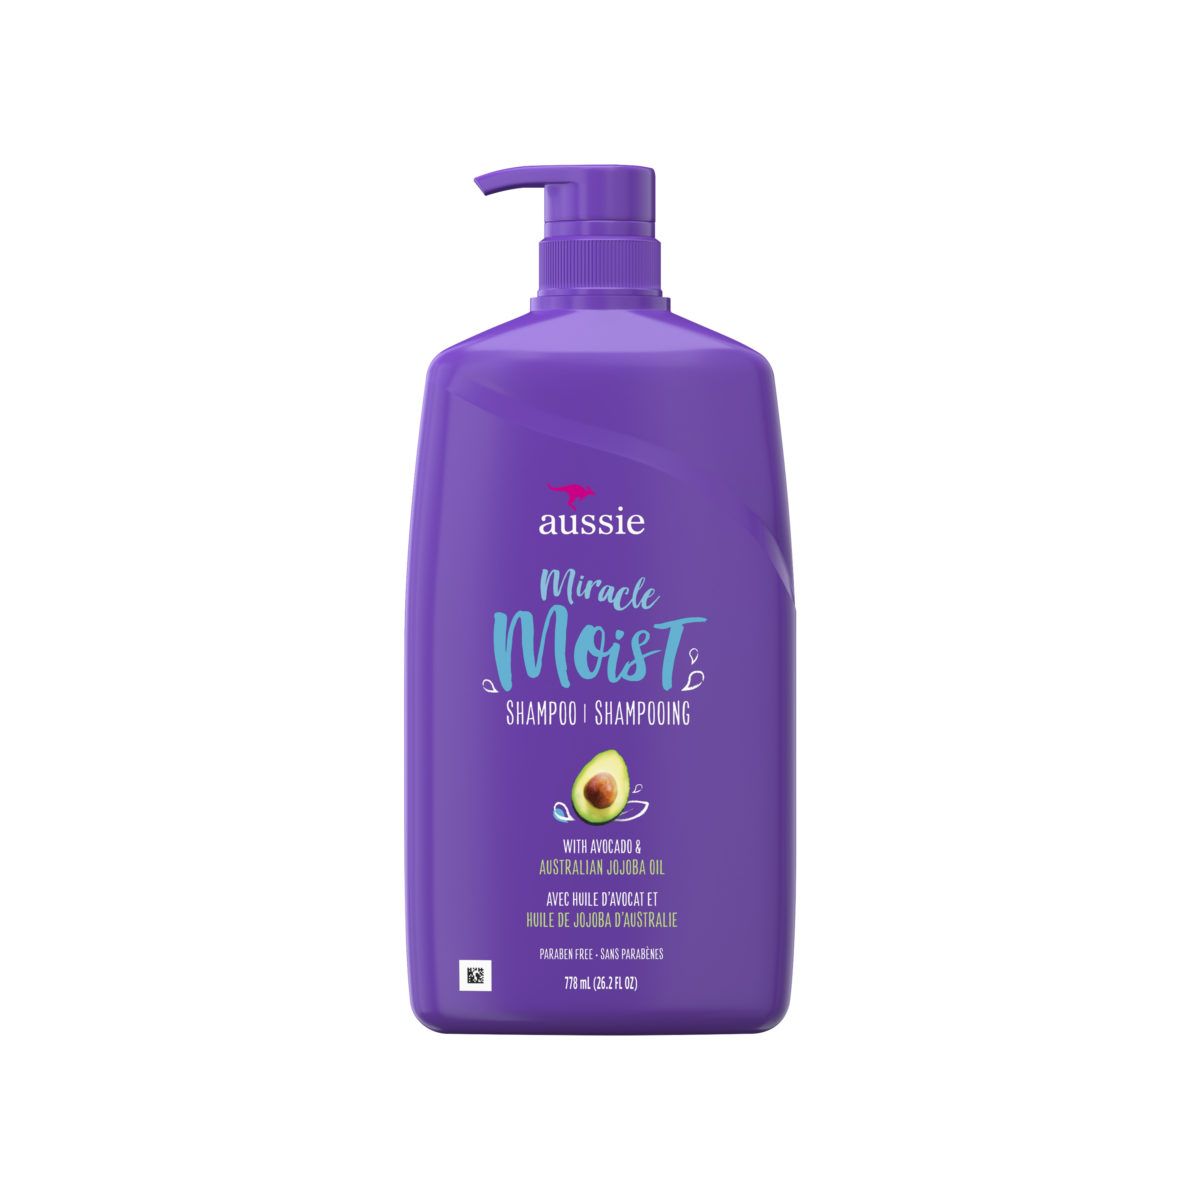 Aussie – Miracle Moist, Shampoo, with Avocado & Australian Jojoba Oil Ohmykajo curly hair care, hair loss treatment, curly hair products Aussie - Miracle moist avocado shampoo